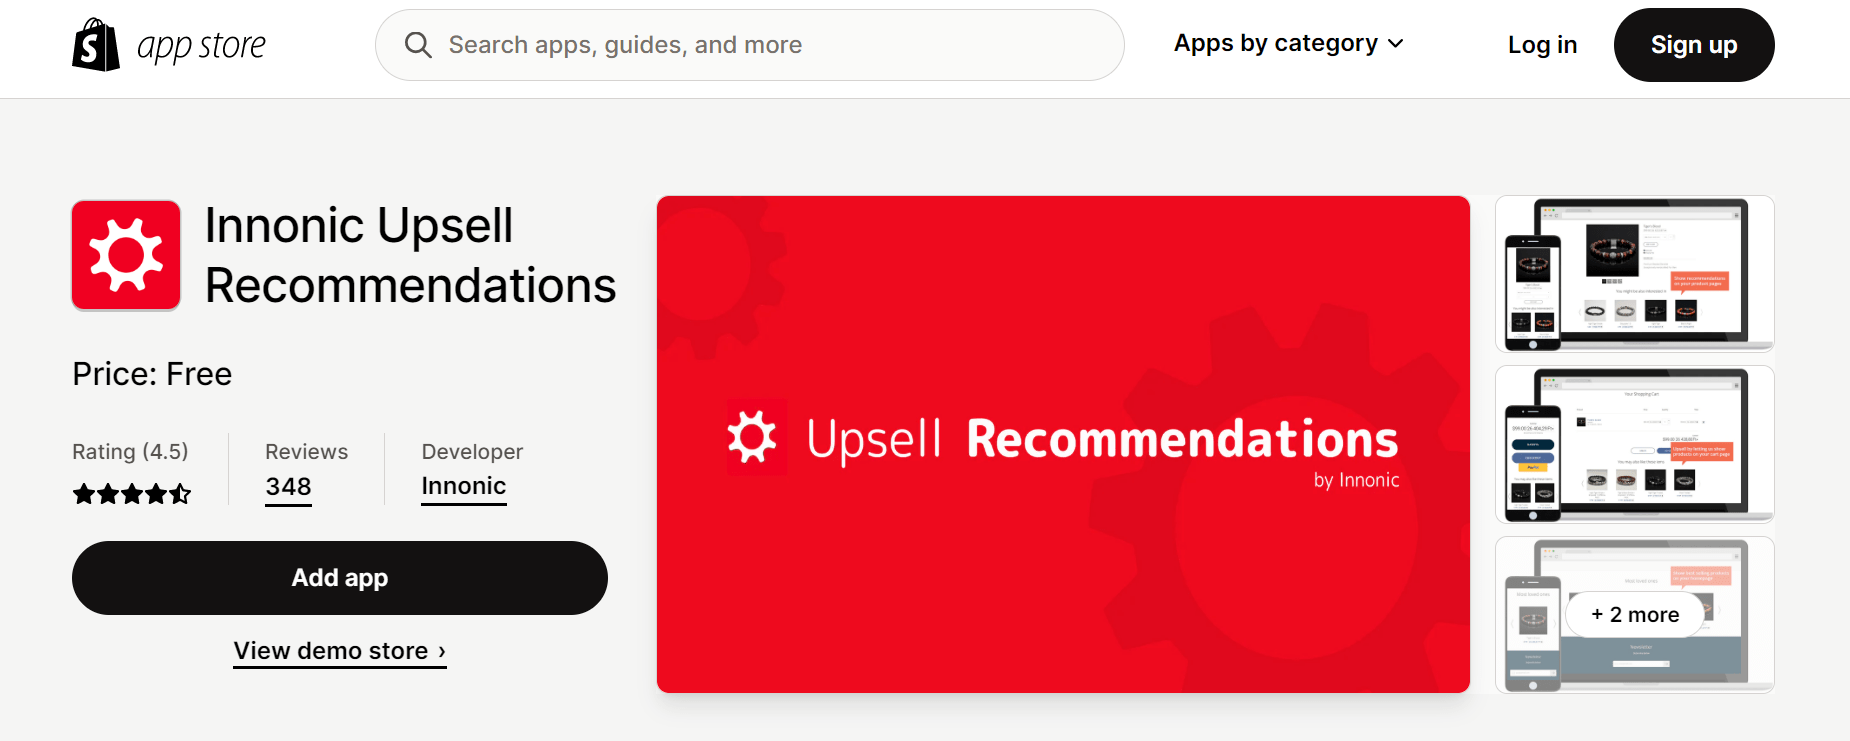 Innonic recommendation app